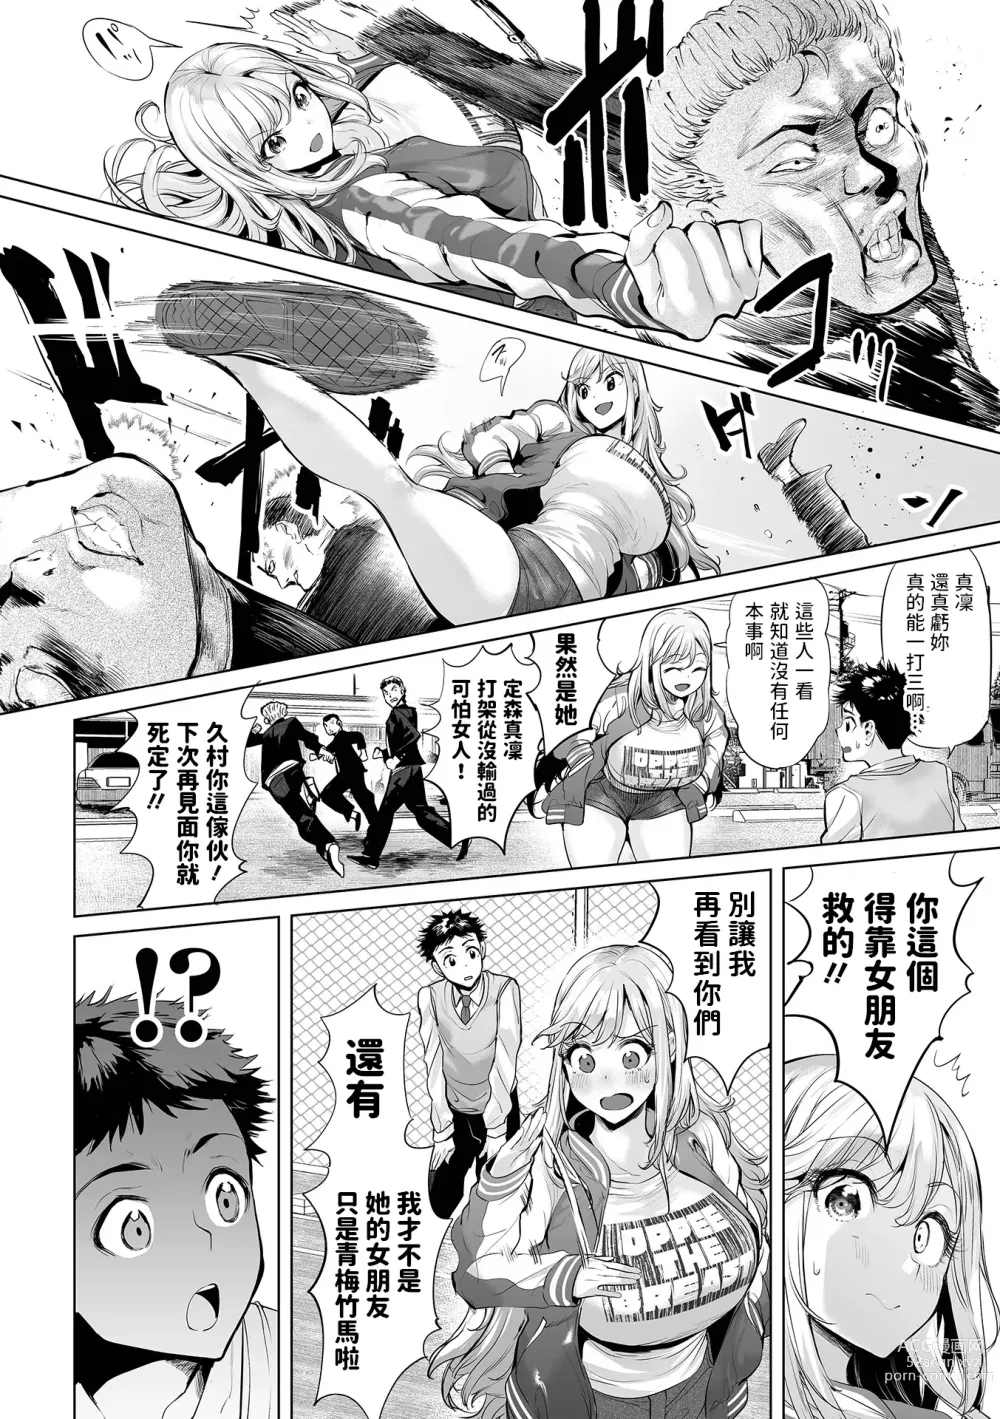 Page 2 of manga Yoroshiku!! My Darling